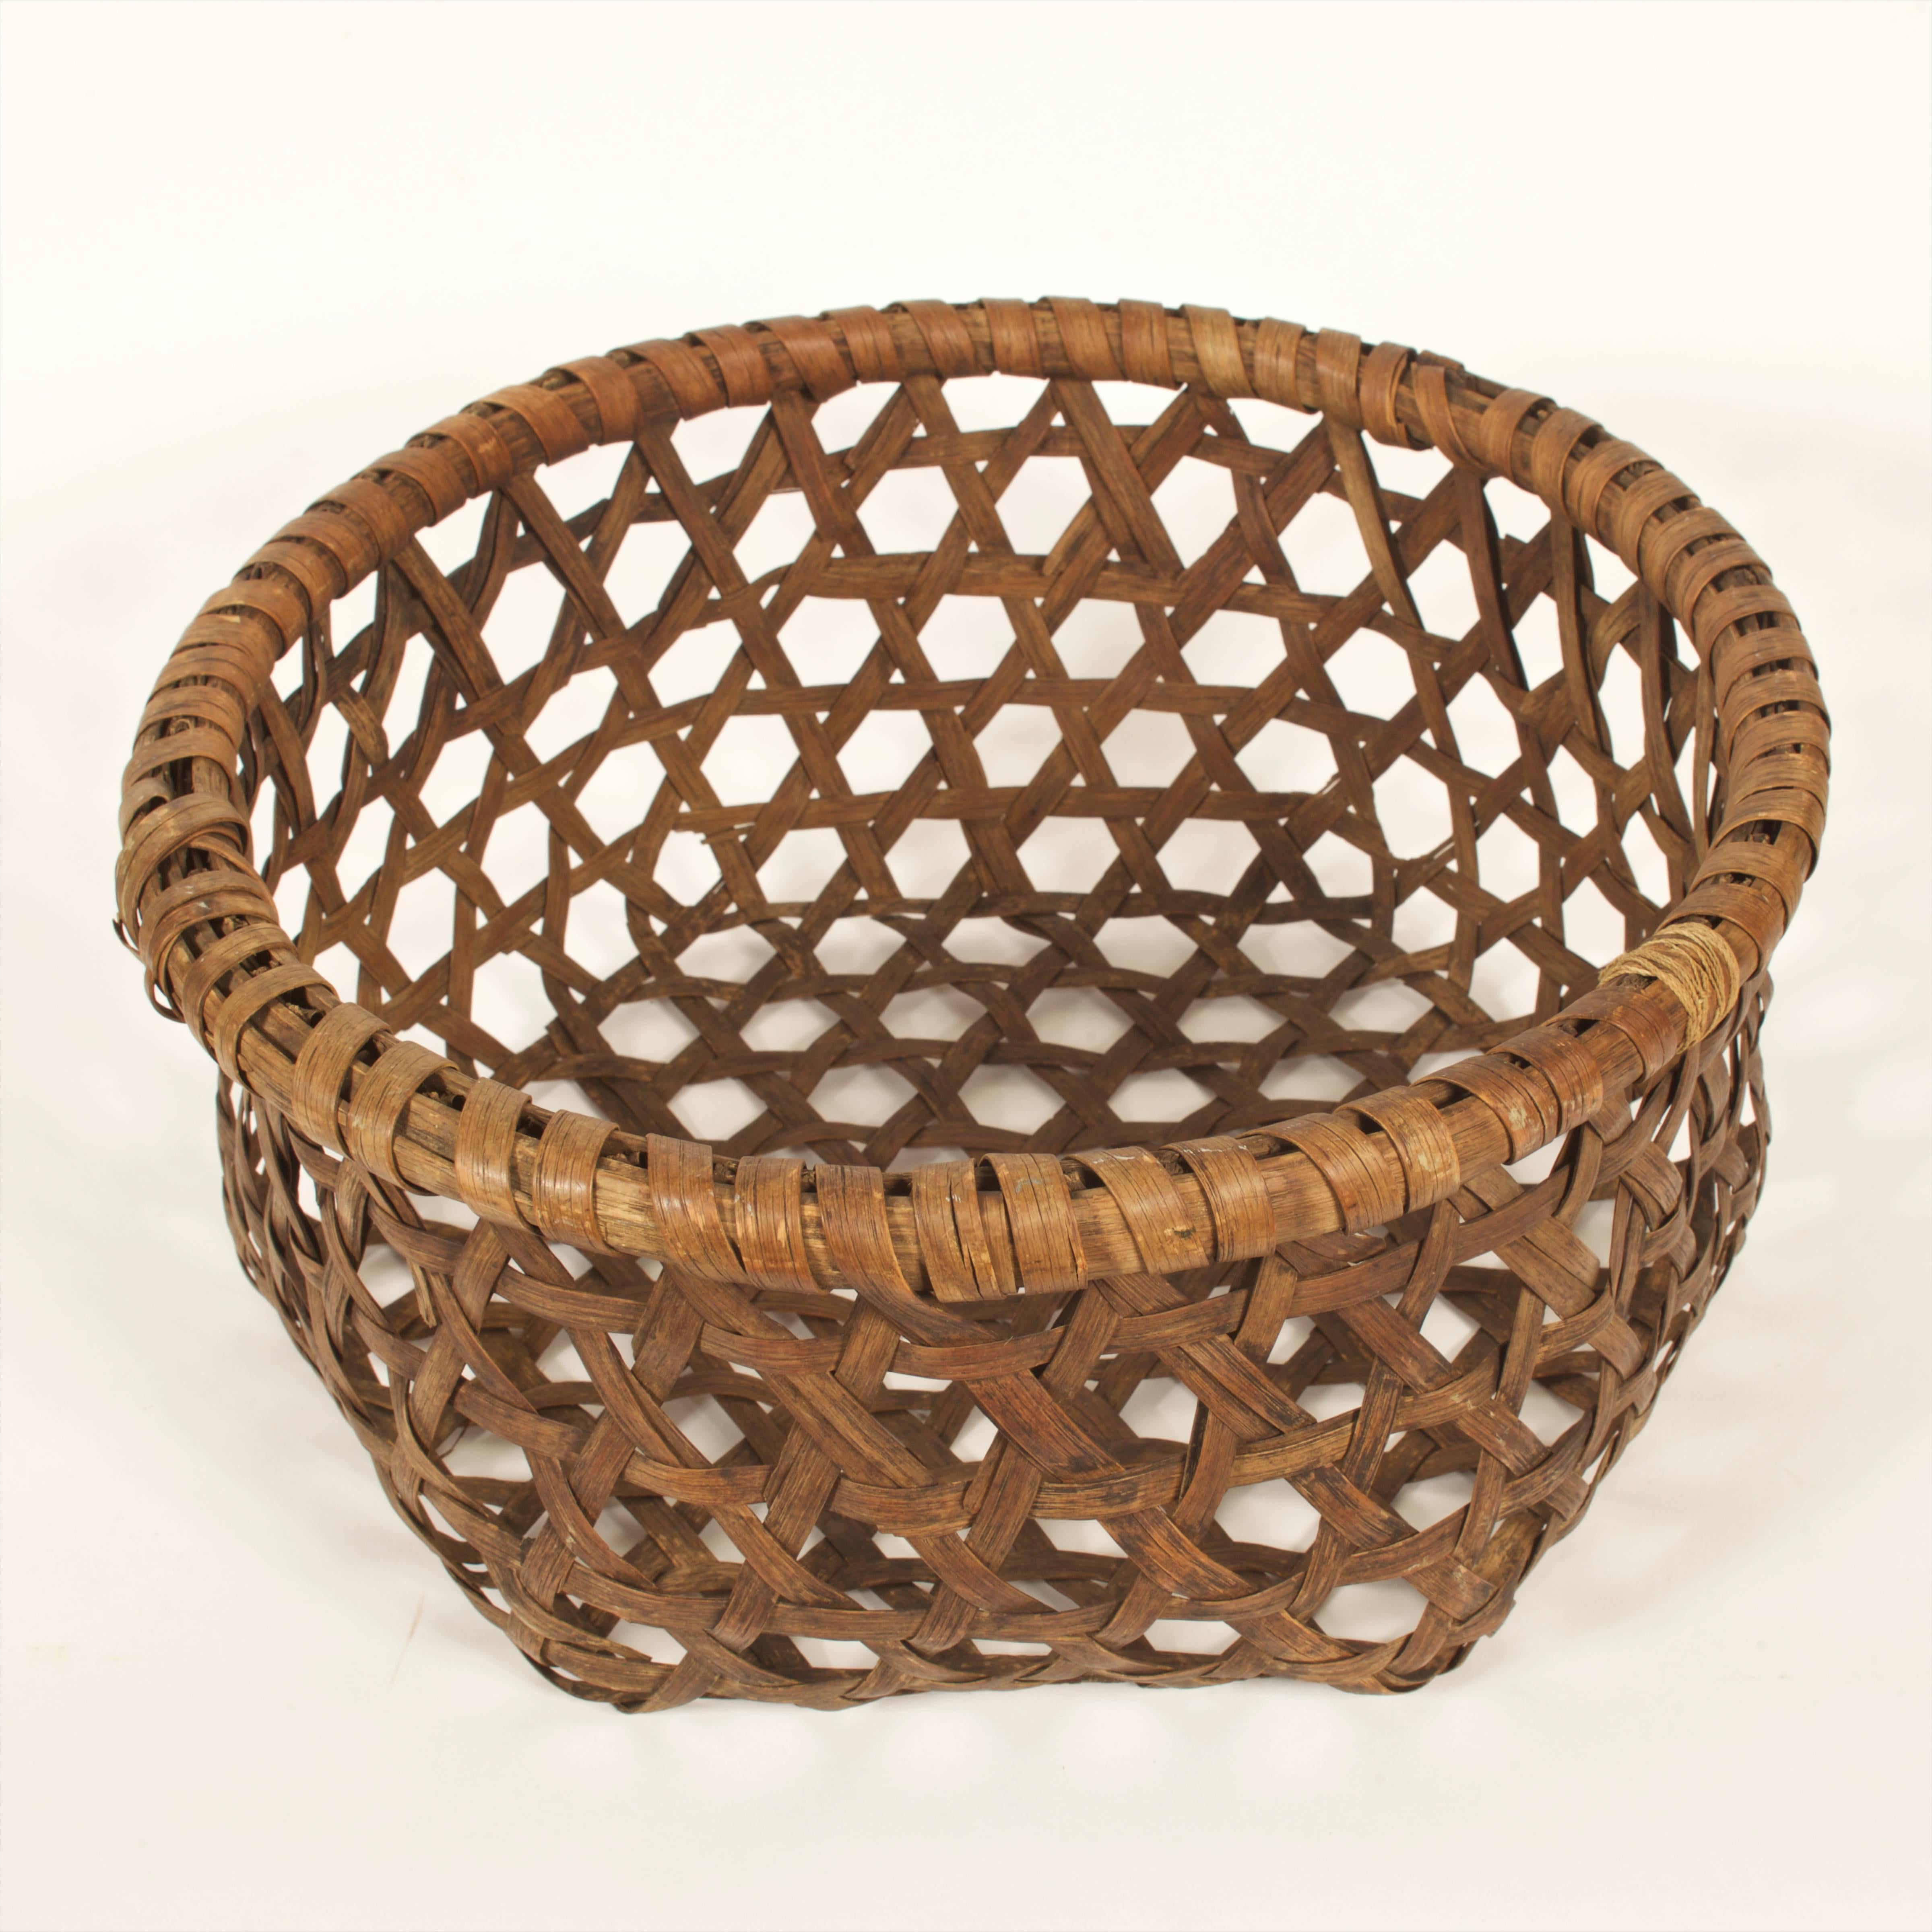 Late 19th century Shaker basket.